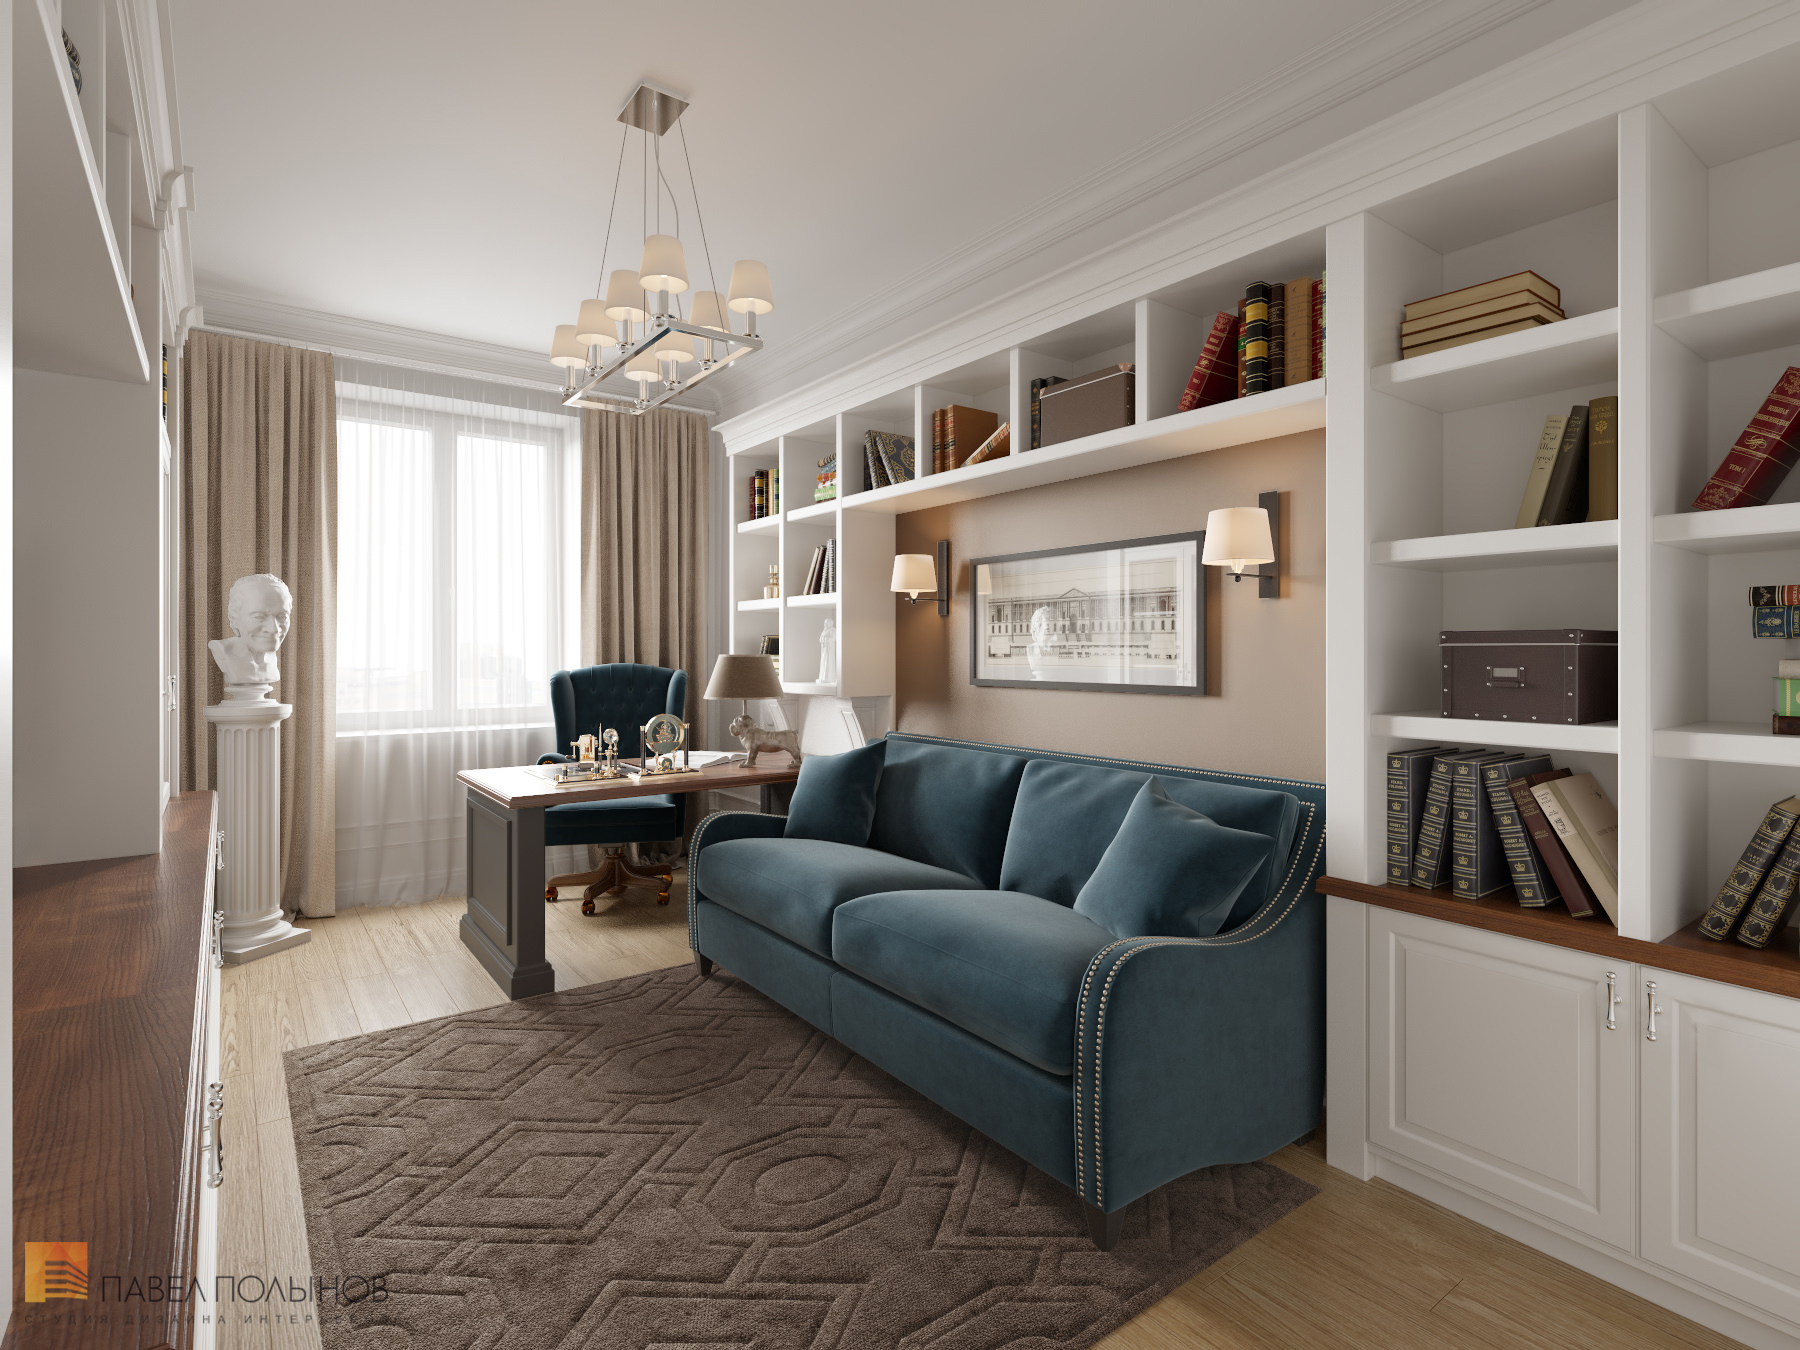 Фото дизайн кабинета из проекта «Интерьер квартиры в стиле неоклассики, ЖК «Парадный квартал», 190 кв.м.»